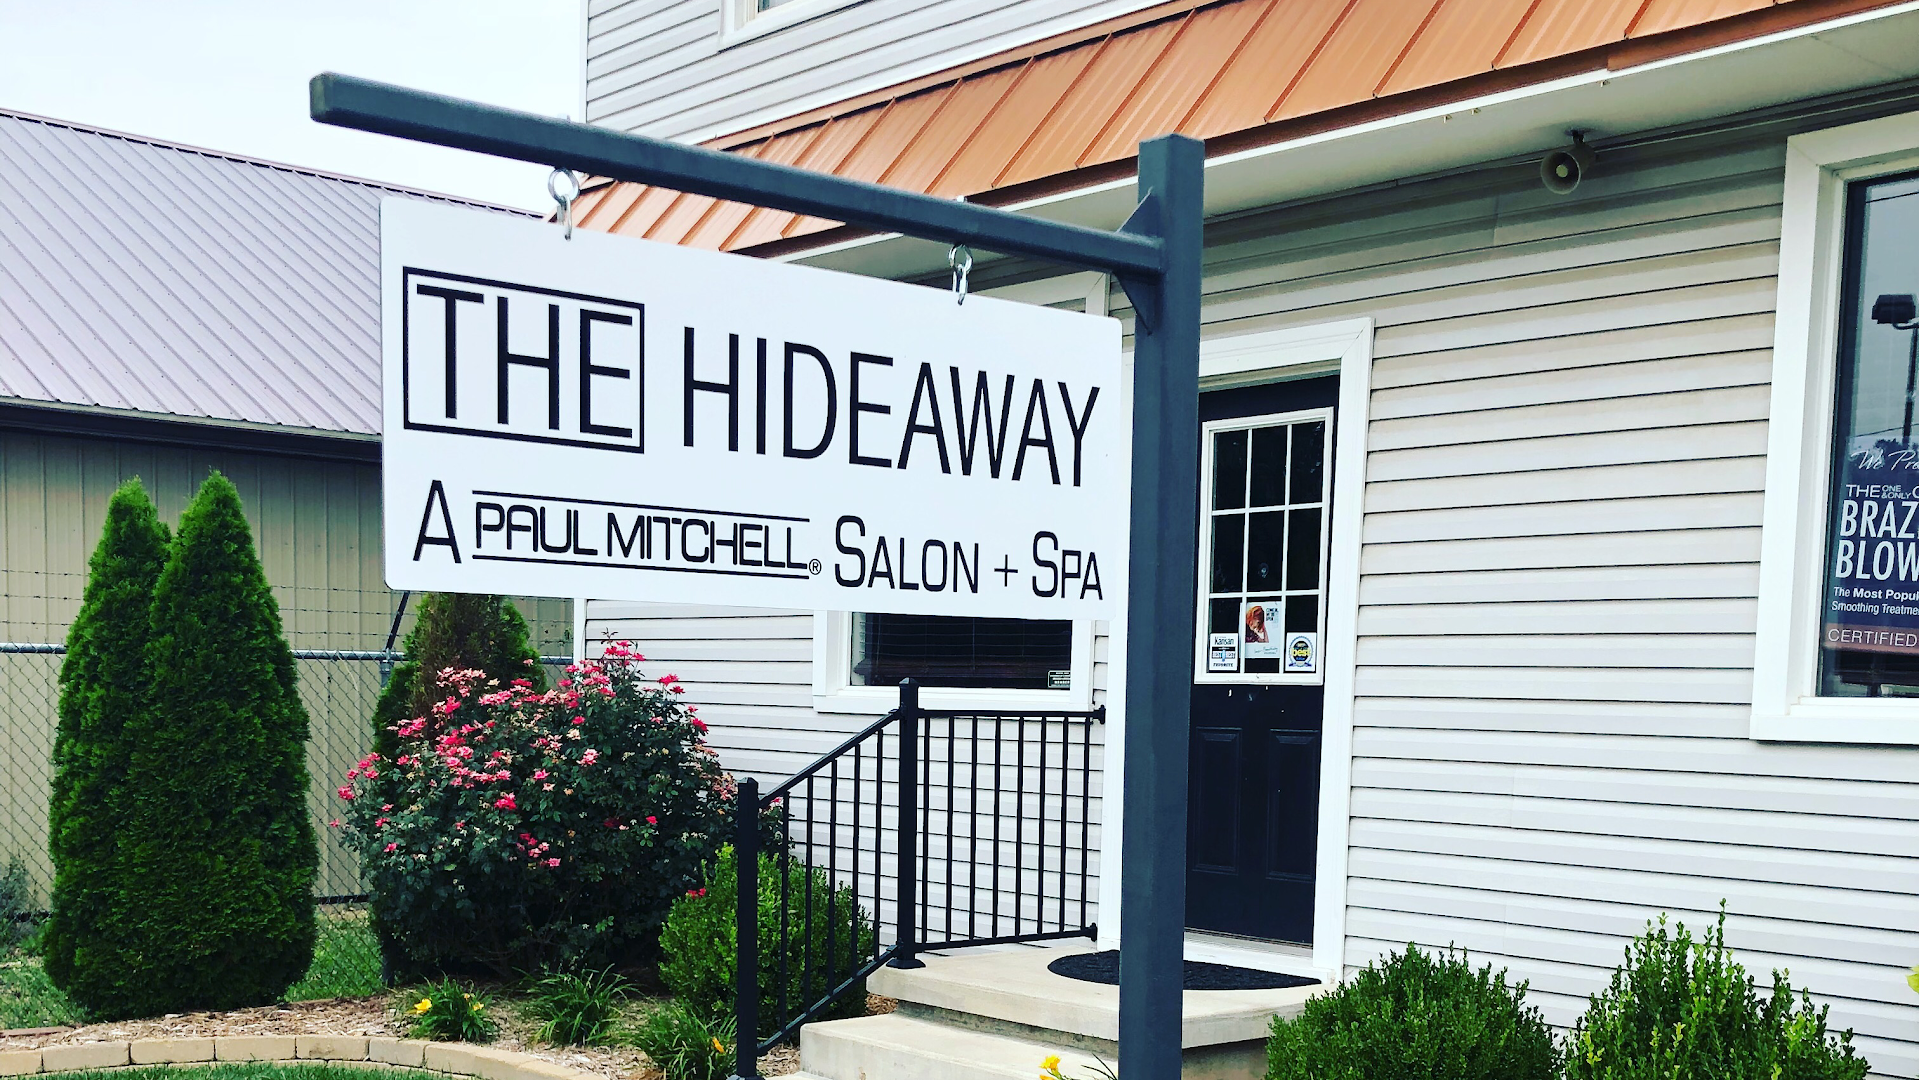 The Hideaway: A Paul Mitchell Salon + Spa